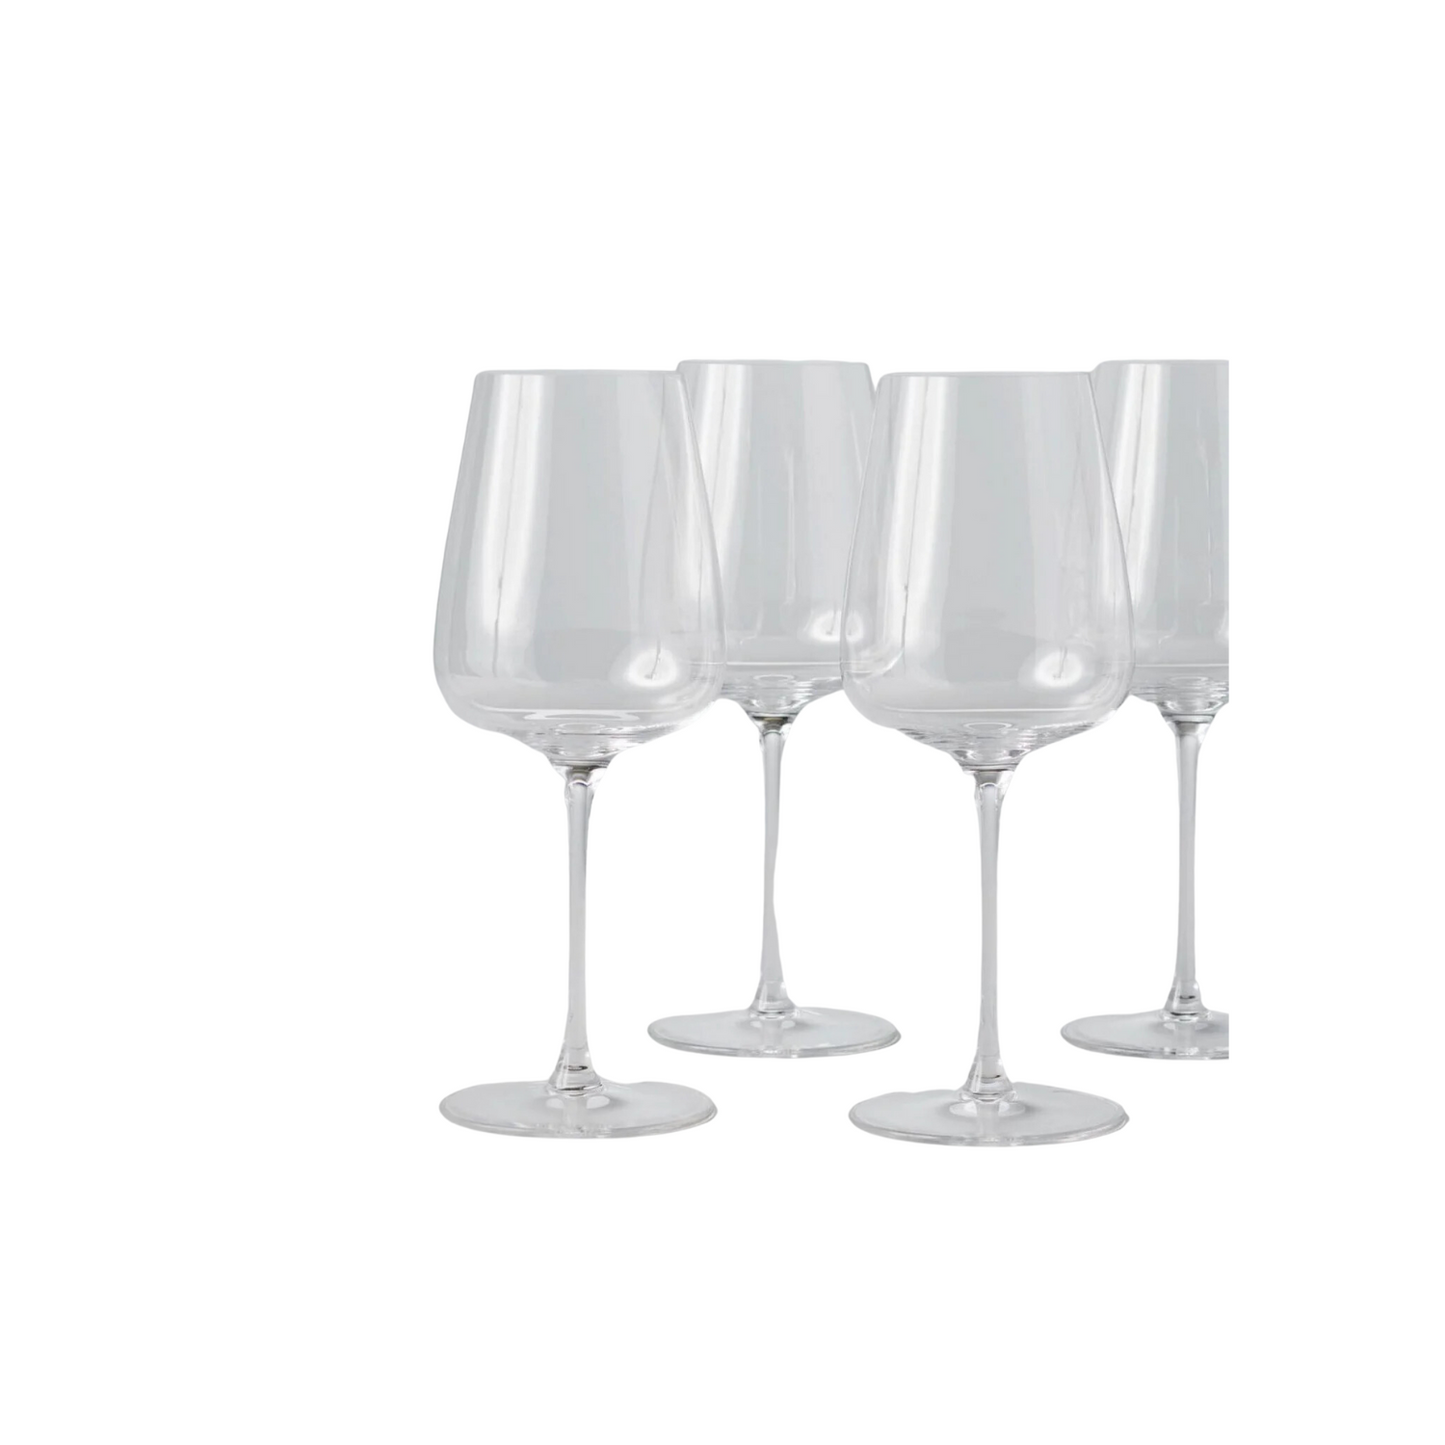 Shatter - Resistant Wine Glasses - Set of 4